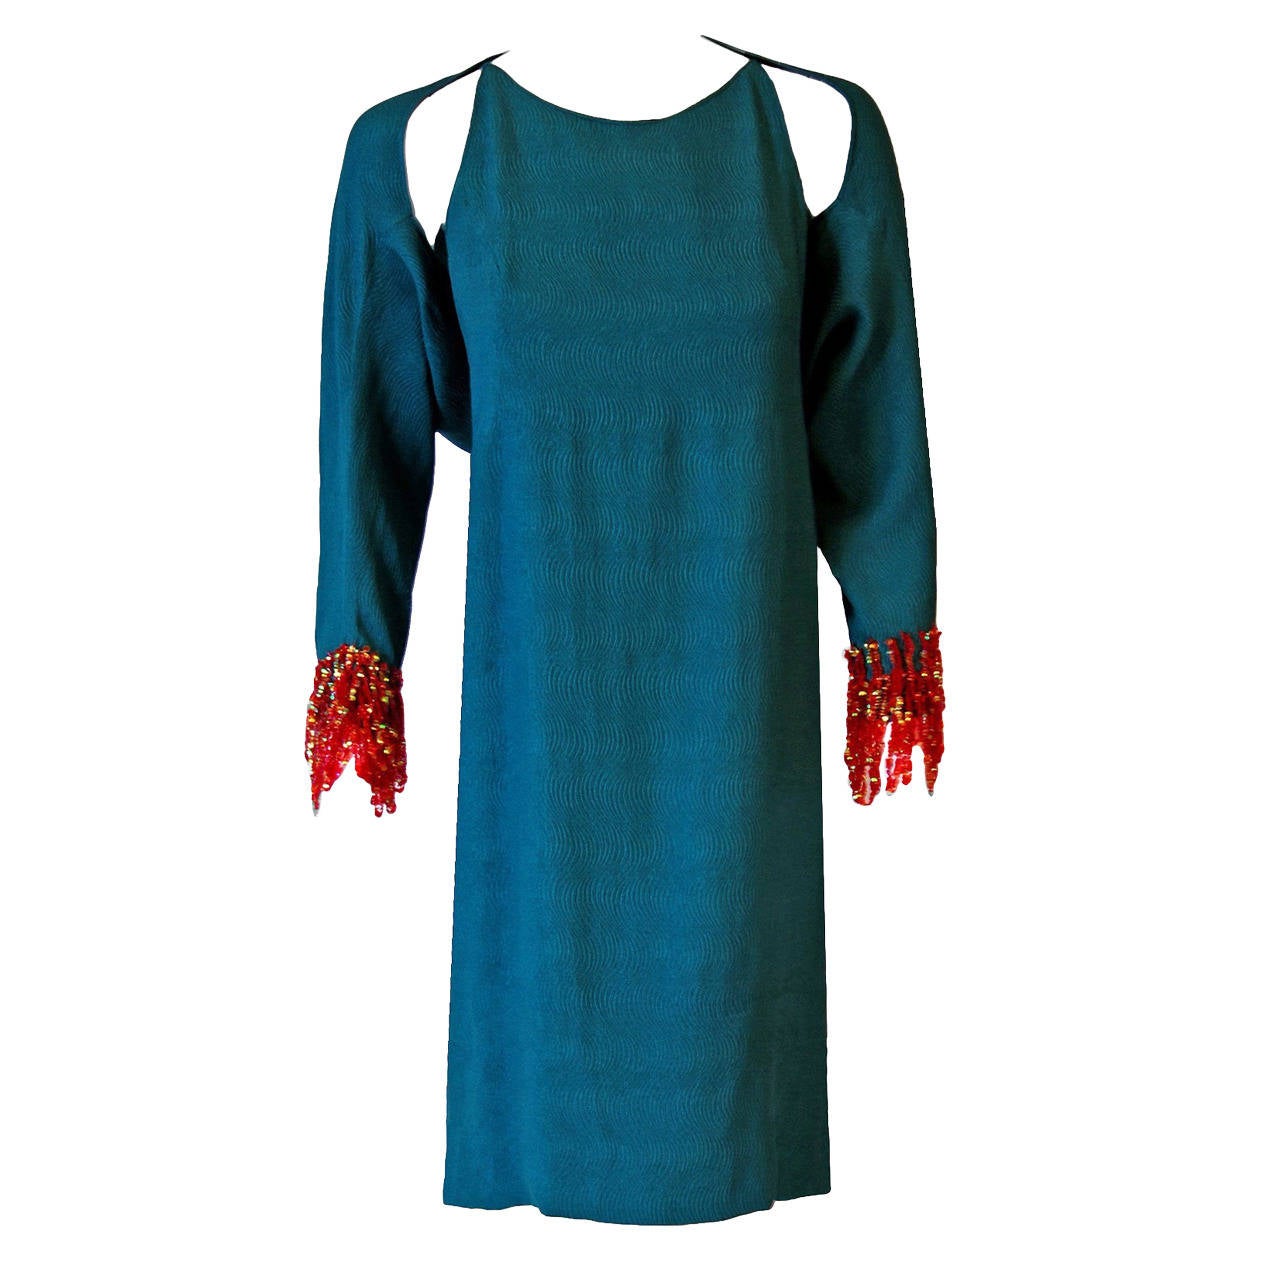 1966 Pierre Cardin Haute-Couture Sequin Teal Blue-Green Silk Mod Dress Ensemble